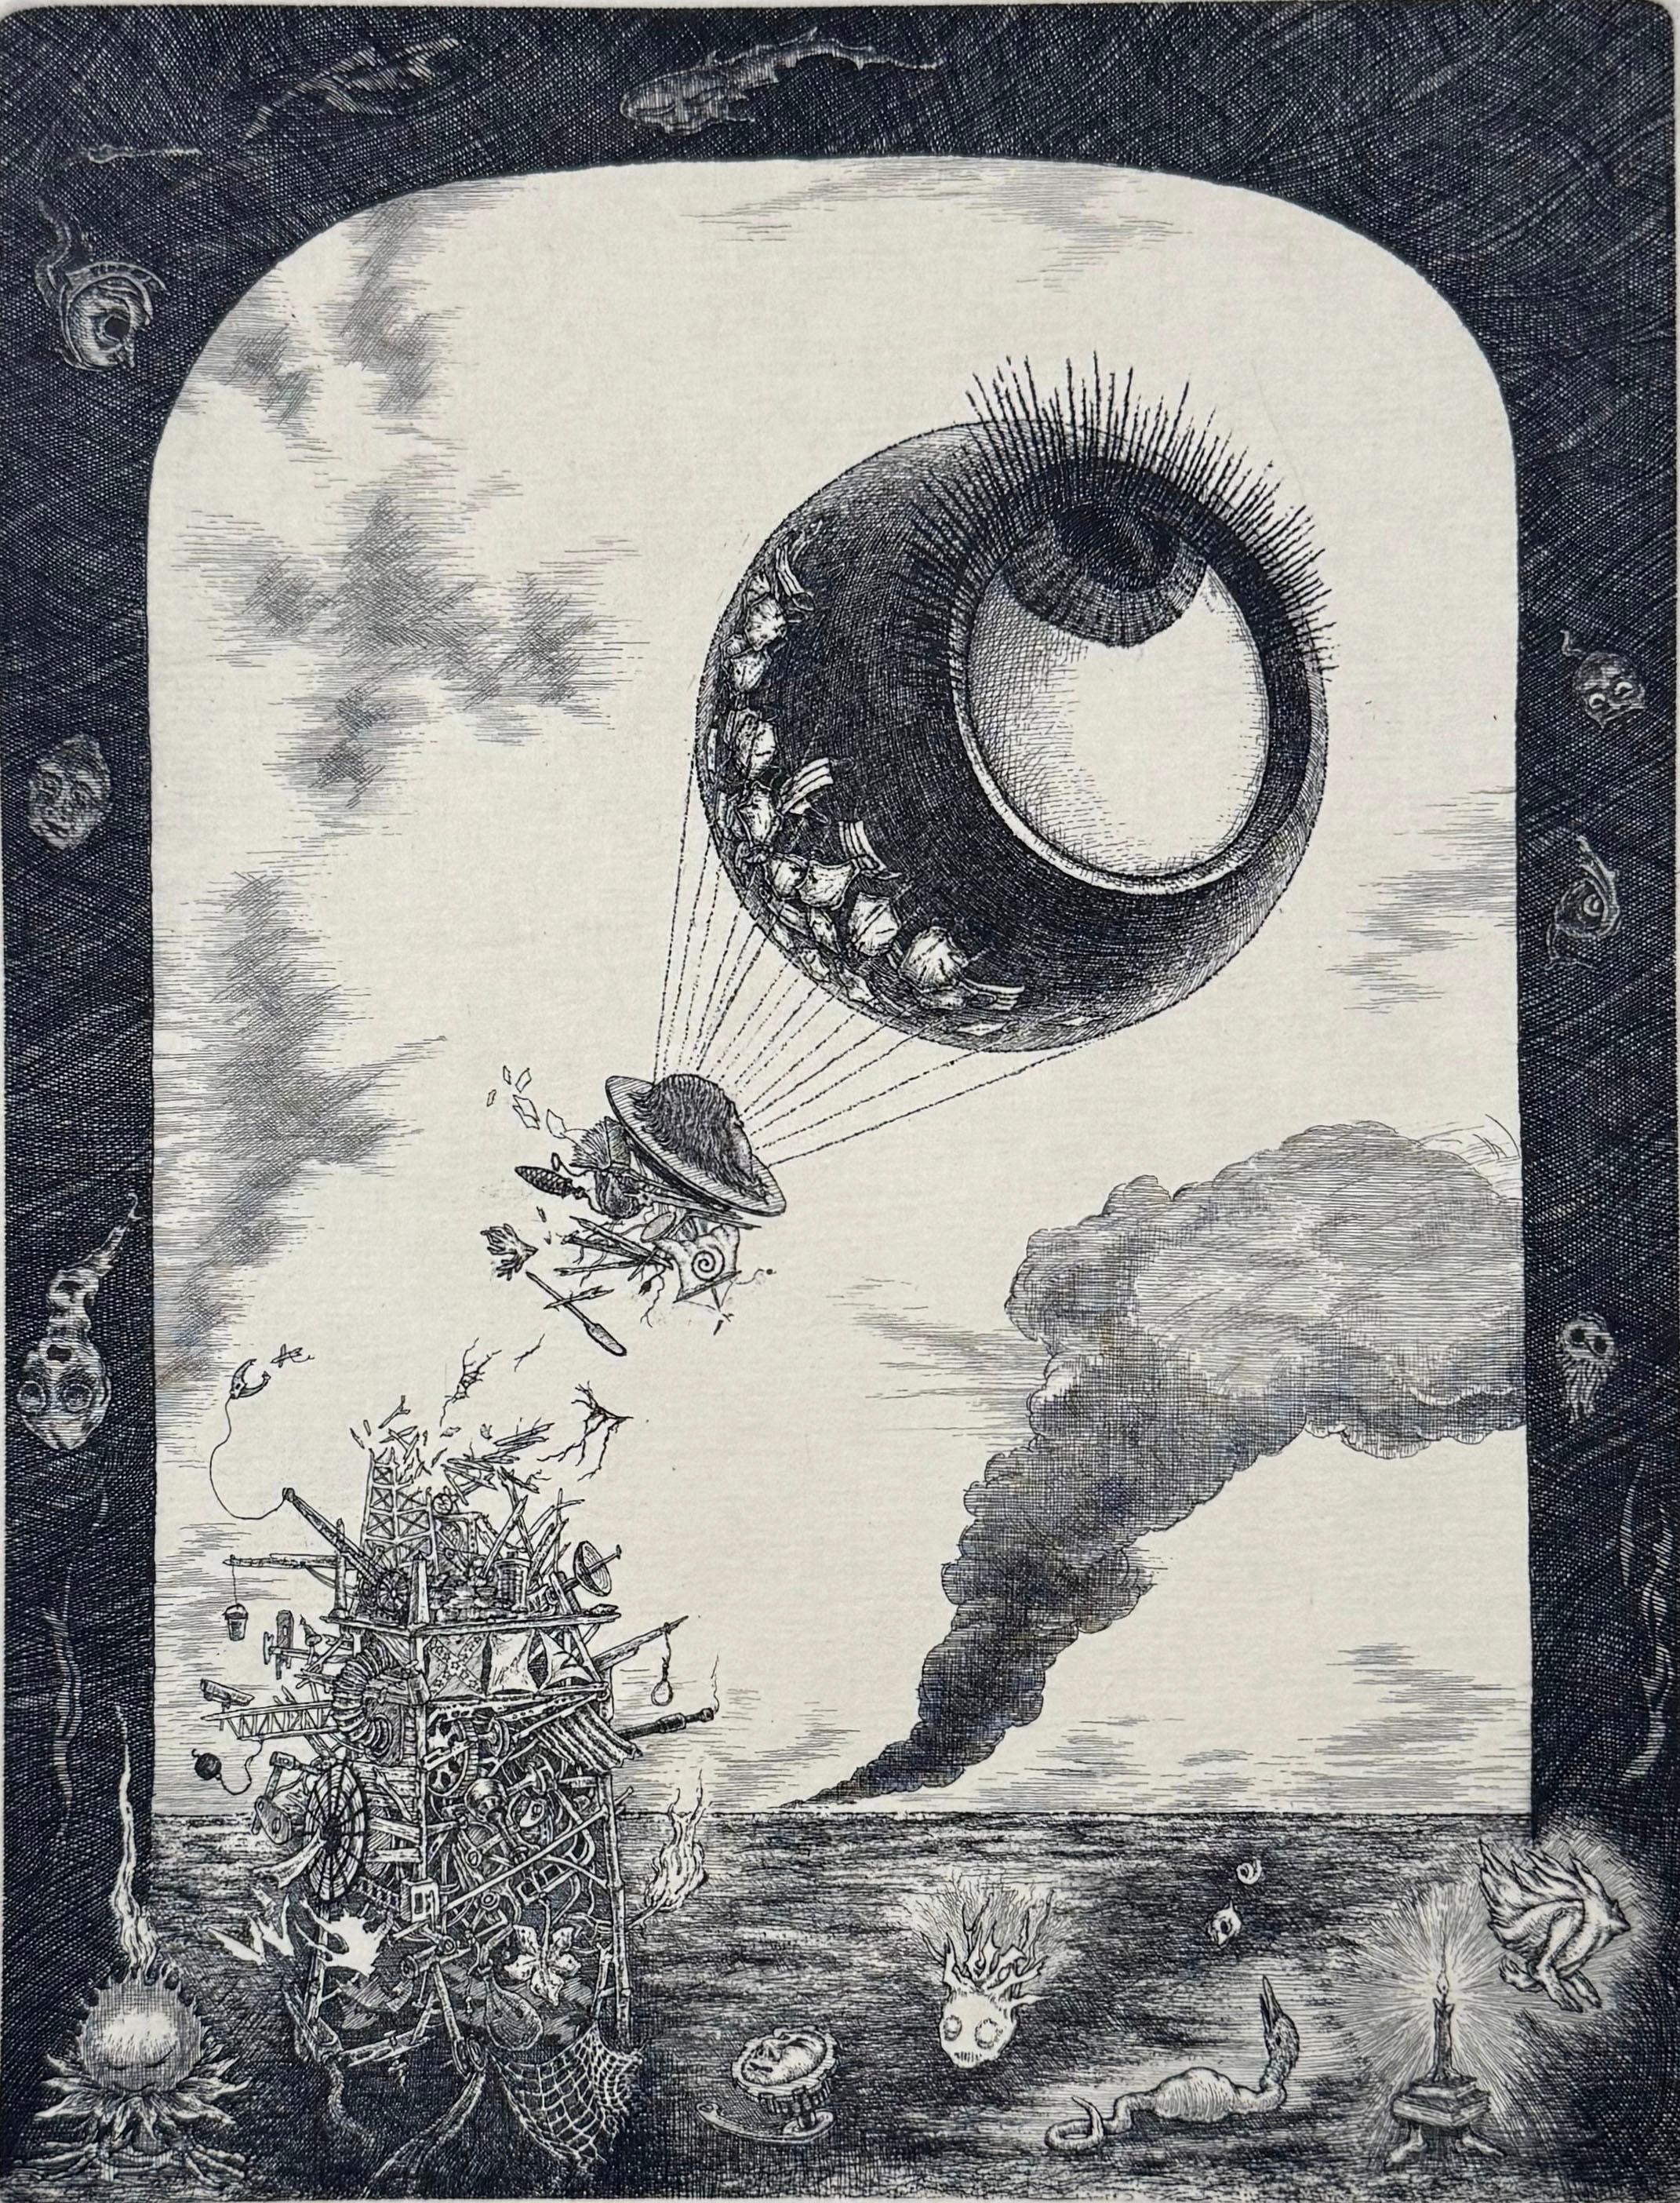 David Avery Landscape Print - Departure - The Eye Like a Strange Ballon